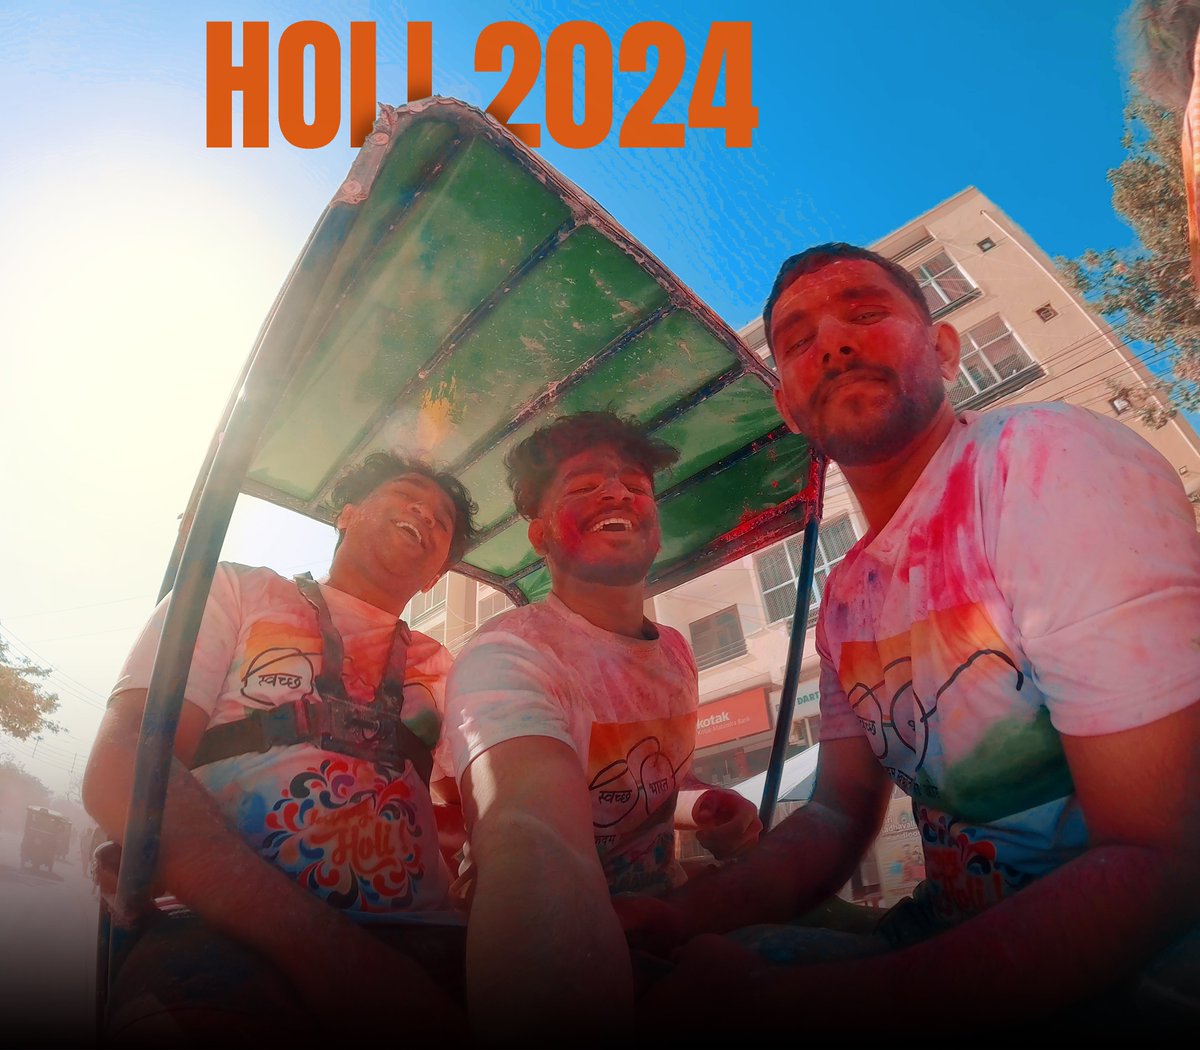 Holi 2024 🇮🇳

#Holi #HoliFestival